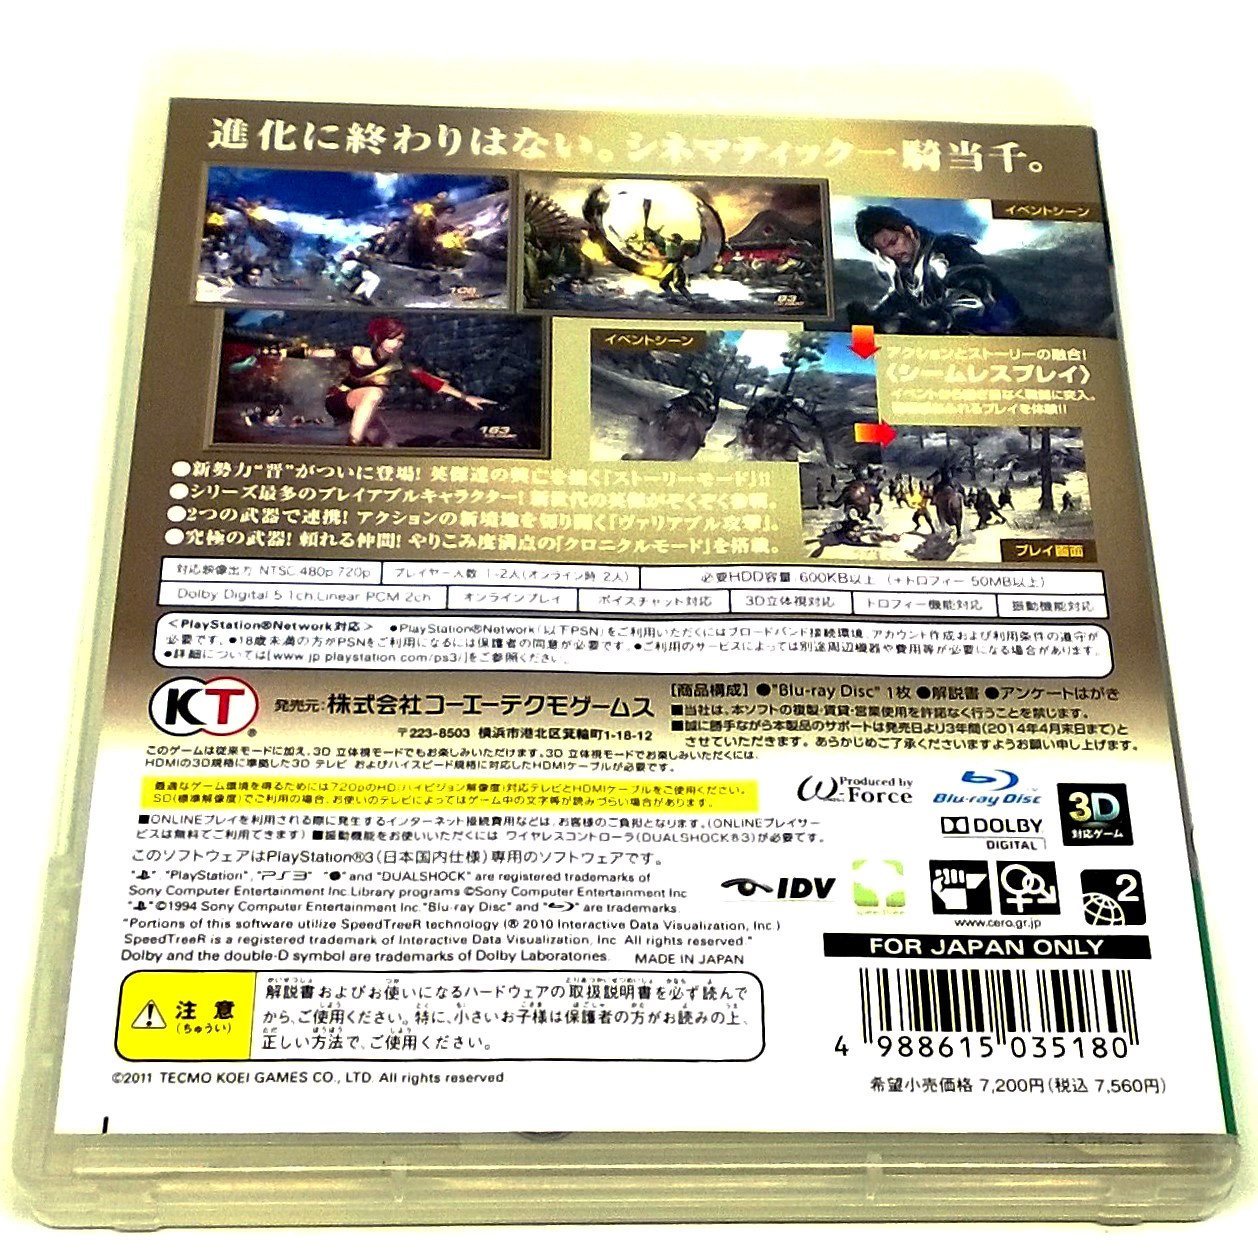 Shin Sangoku Musou 6 for PlayStation 3 (Import) - Back of case